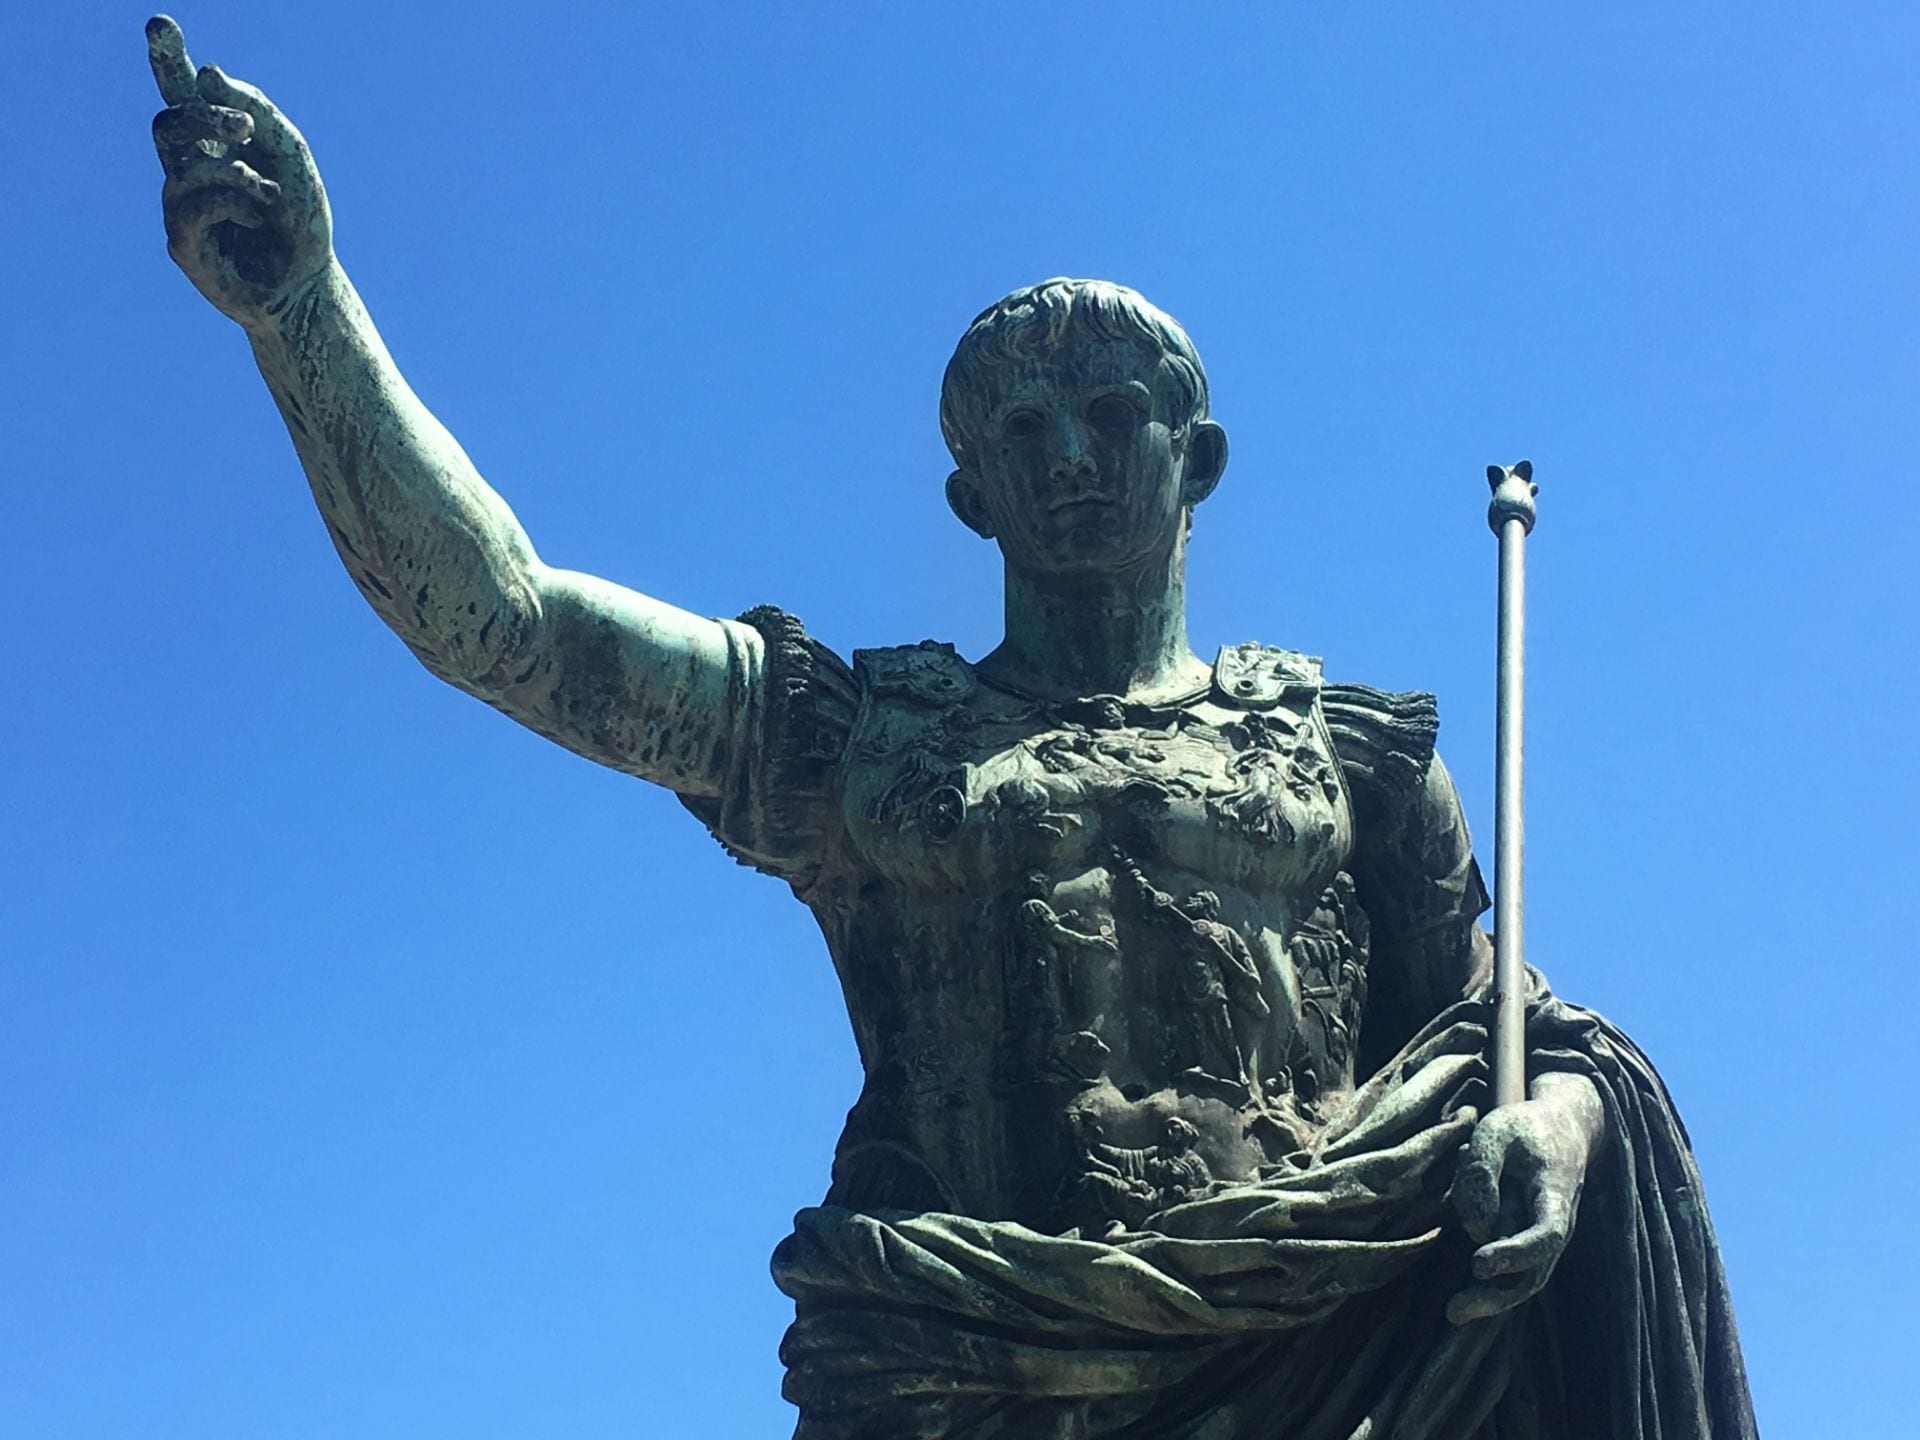 Twentieth-century bronze statue of the Roman Emperor Augustus, erected by Mussolini, Via dei Fori Imperiali, Rome, 2018. Photograph © Donna Storey